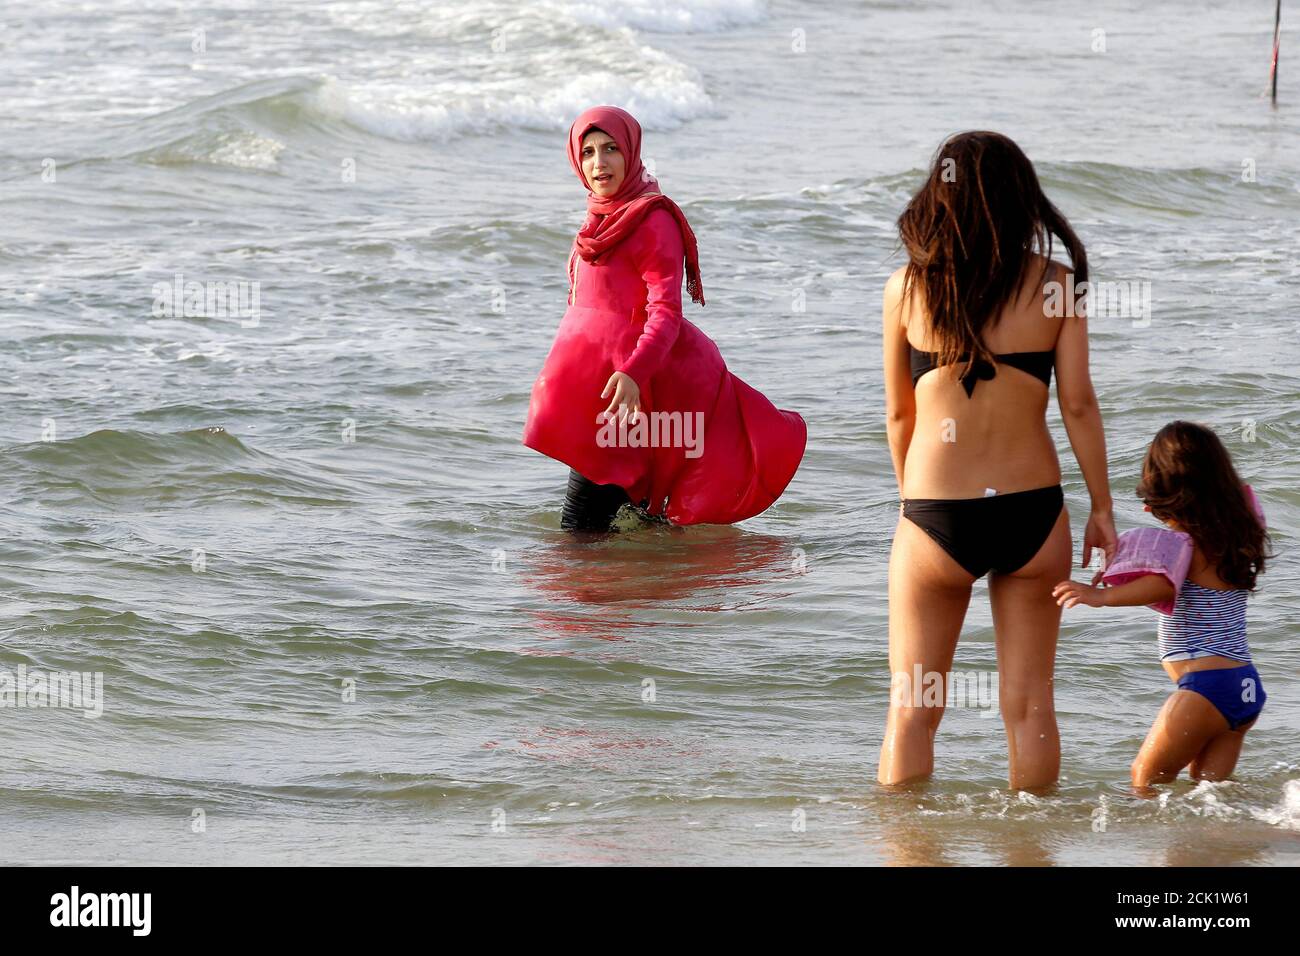 Israel beach woman bikini hi-res stock photography and images - Alamy